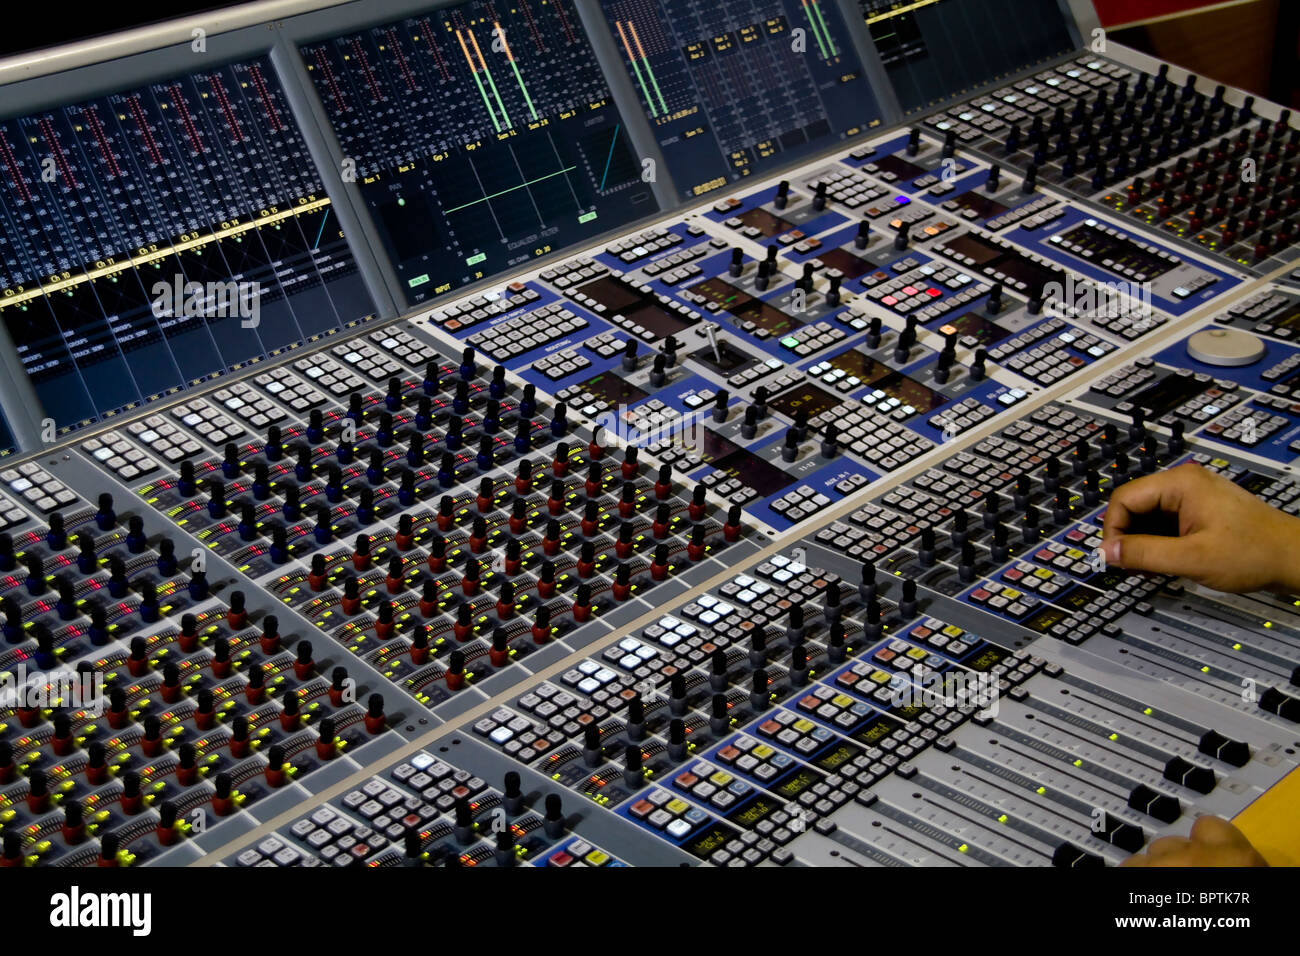 professional mixer desk at studio Stock Photo - Alamy